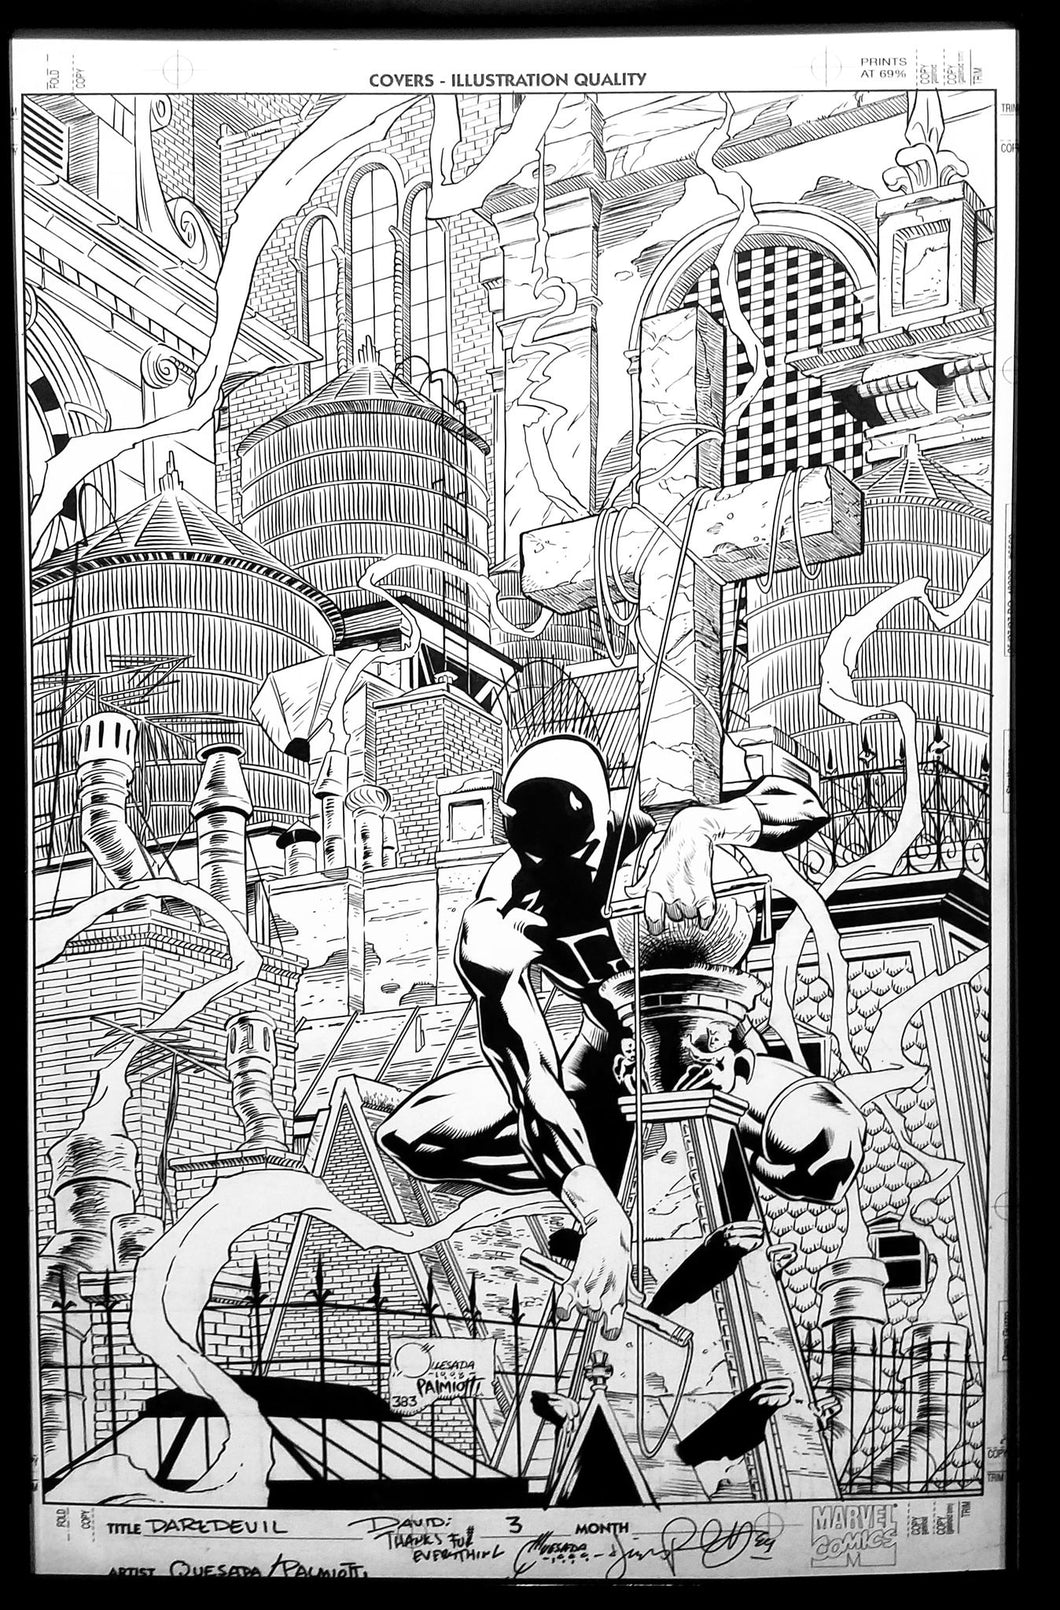 Daredevil #3 by Joe Quesada 11x17 FRAMED Original Art Poster Marvel Comics